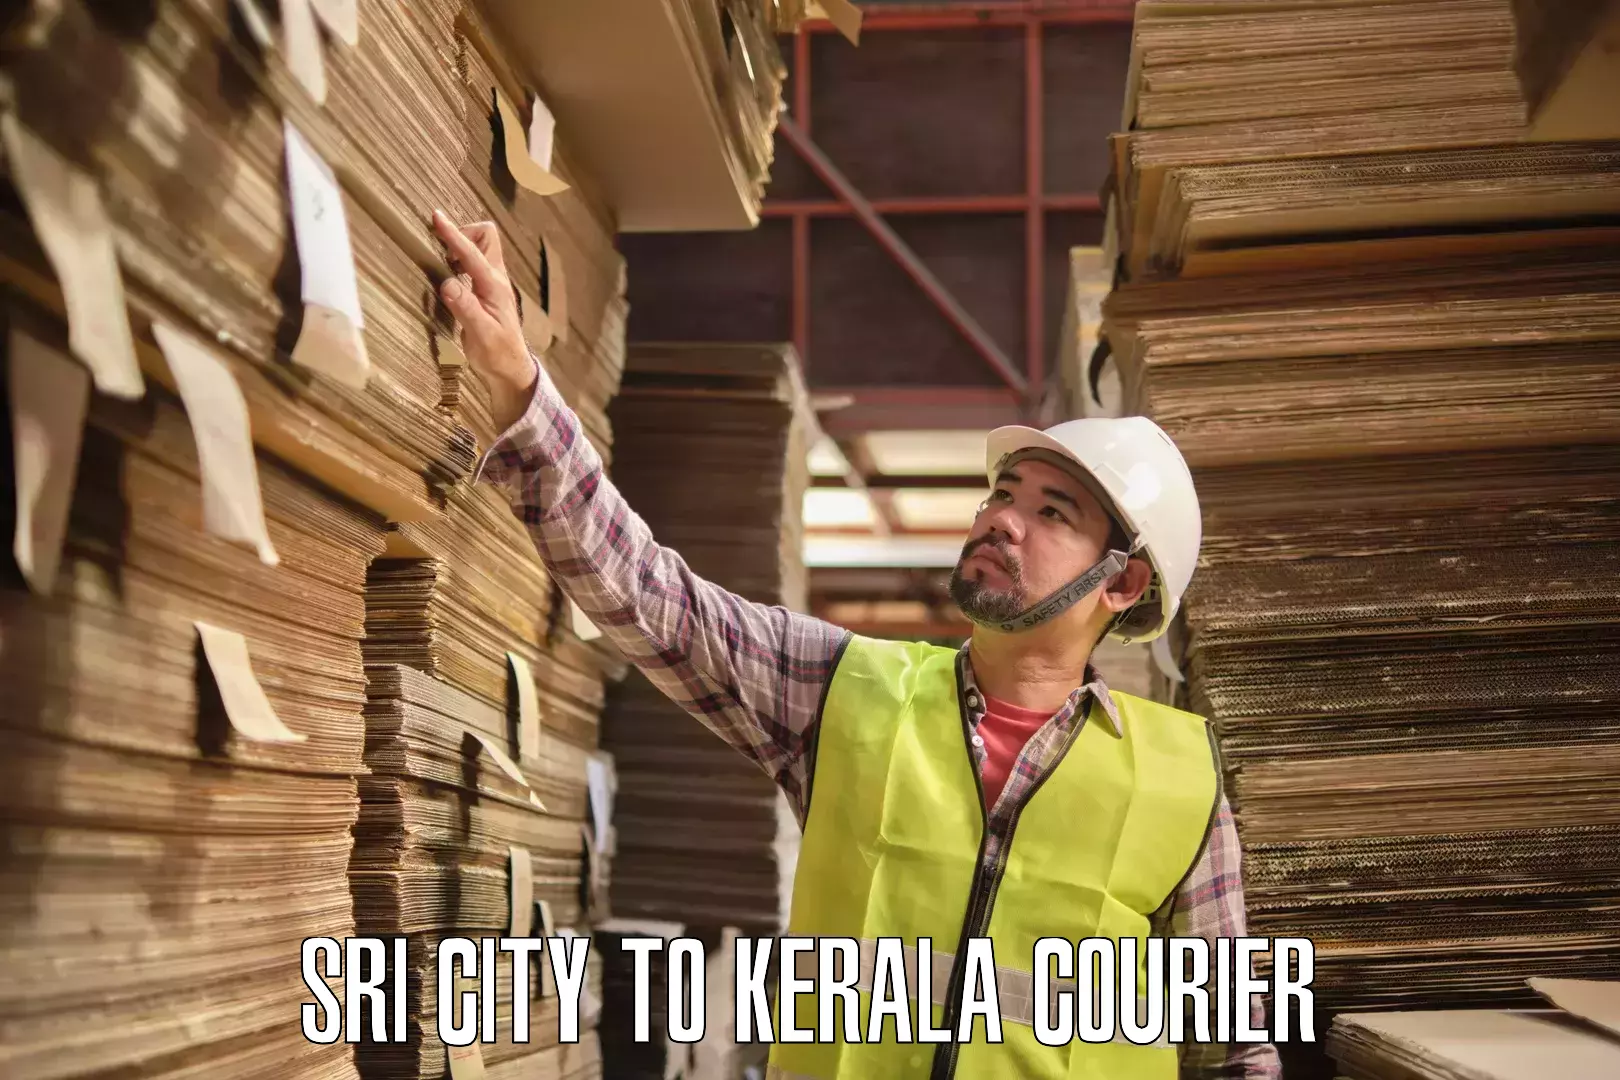 Courier service booking Sri City to Manjeshwar